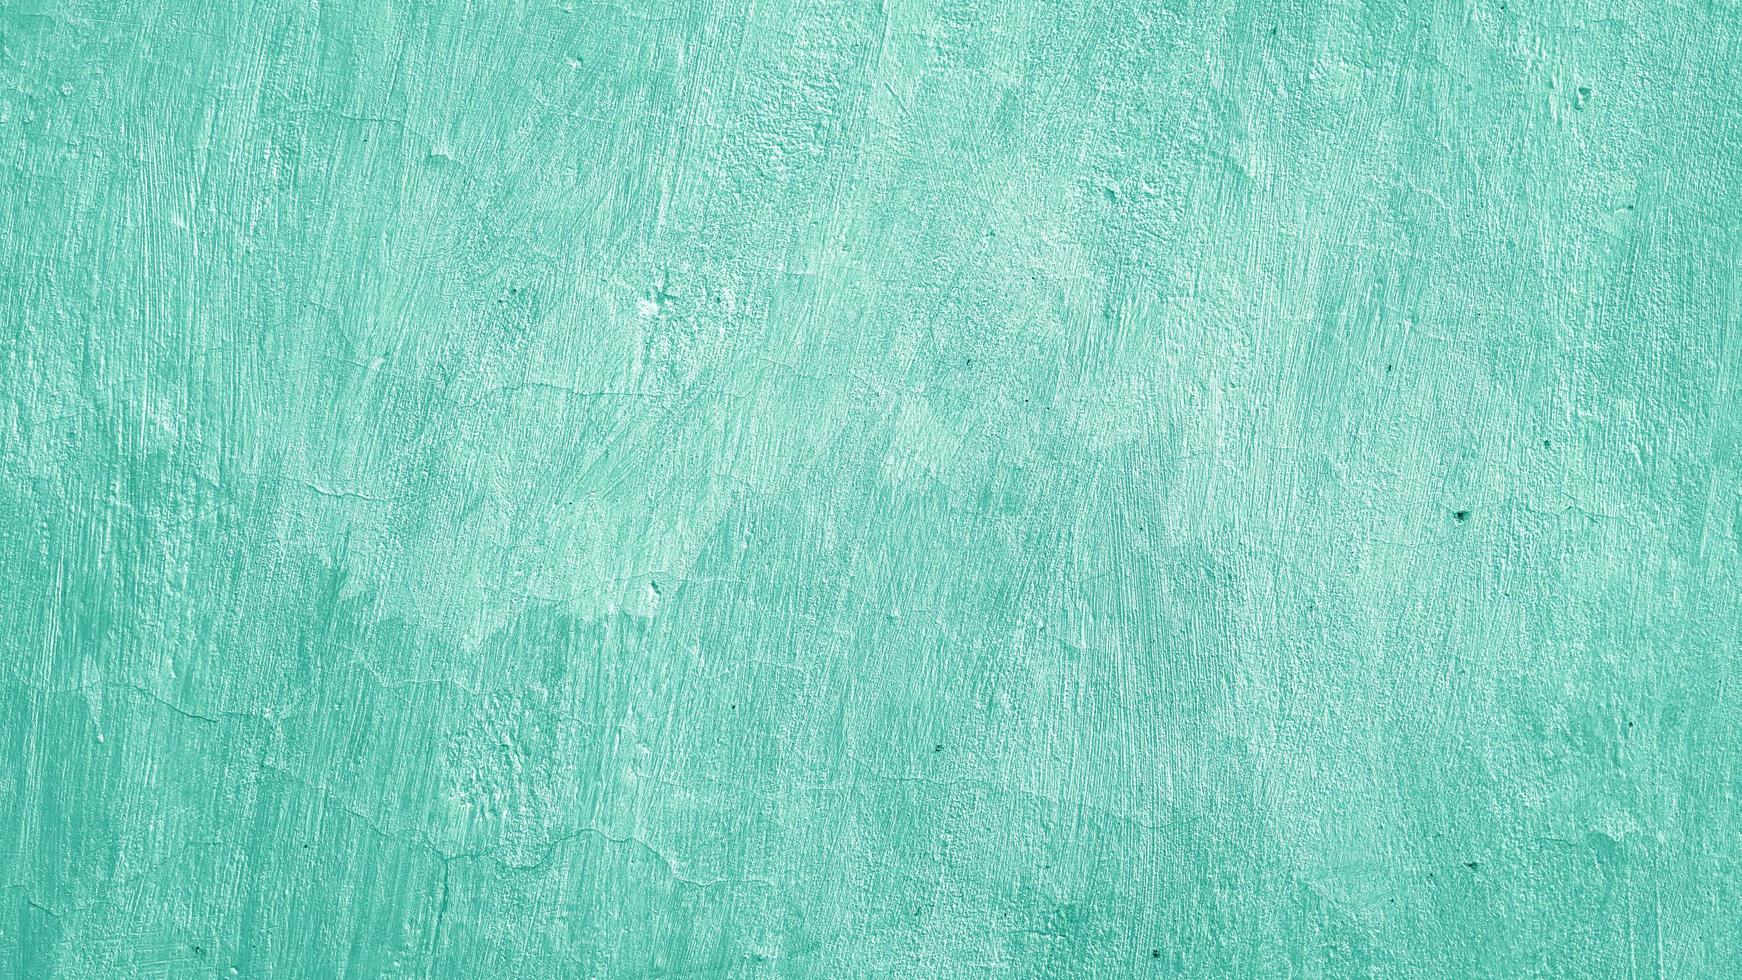 fundo de textura de parede de concreto verde azul cerceta abstrato cimento foto